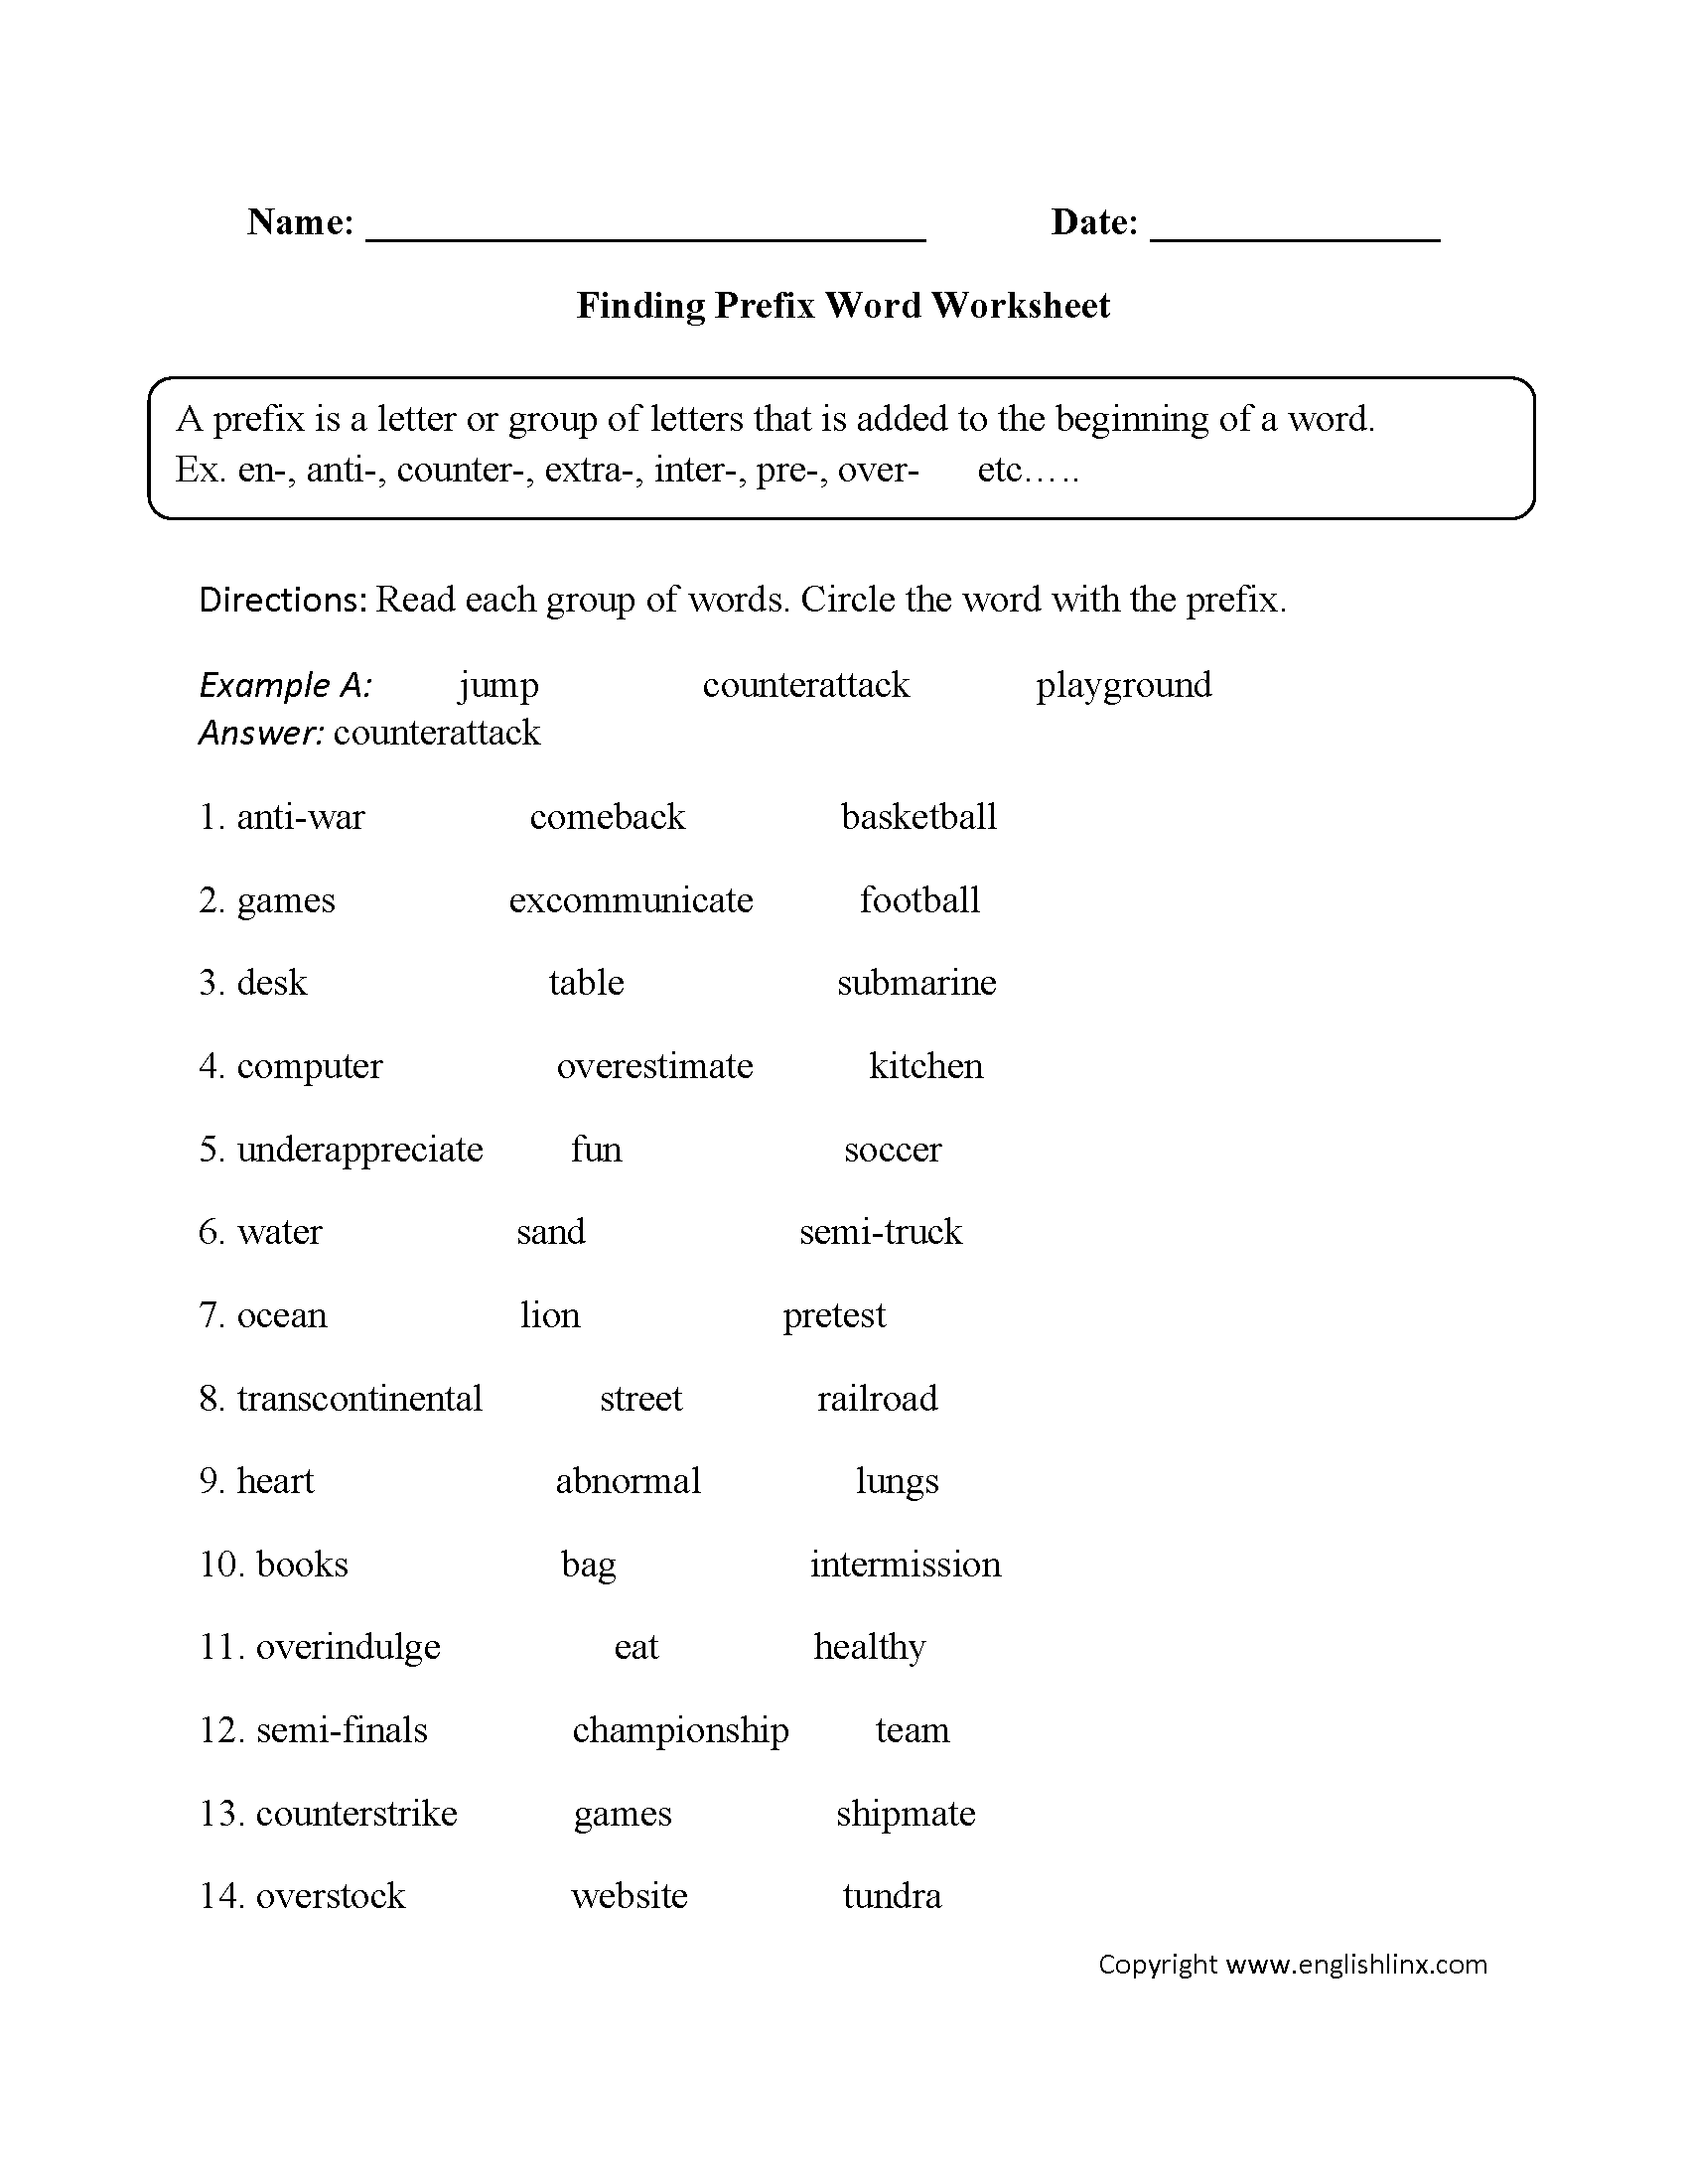 Finding Prefix Word Worksheet